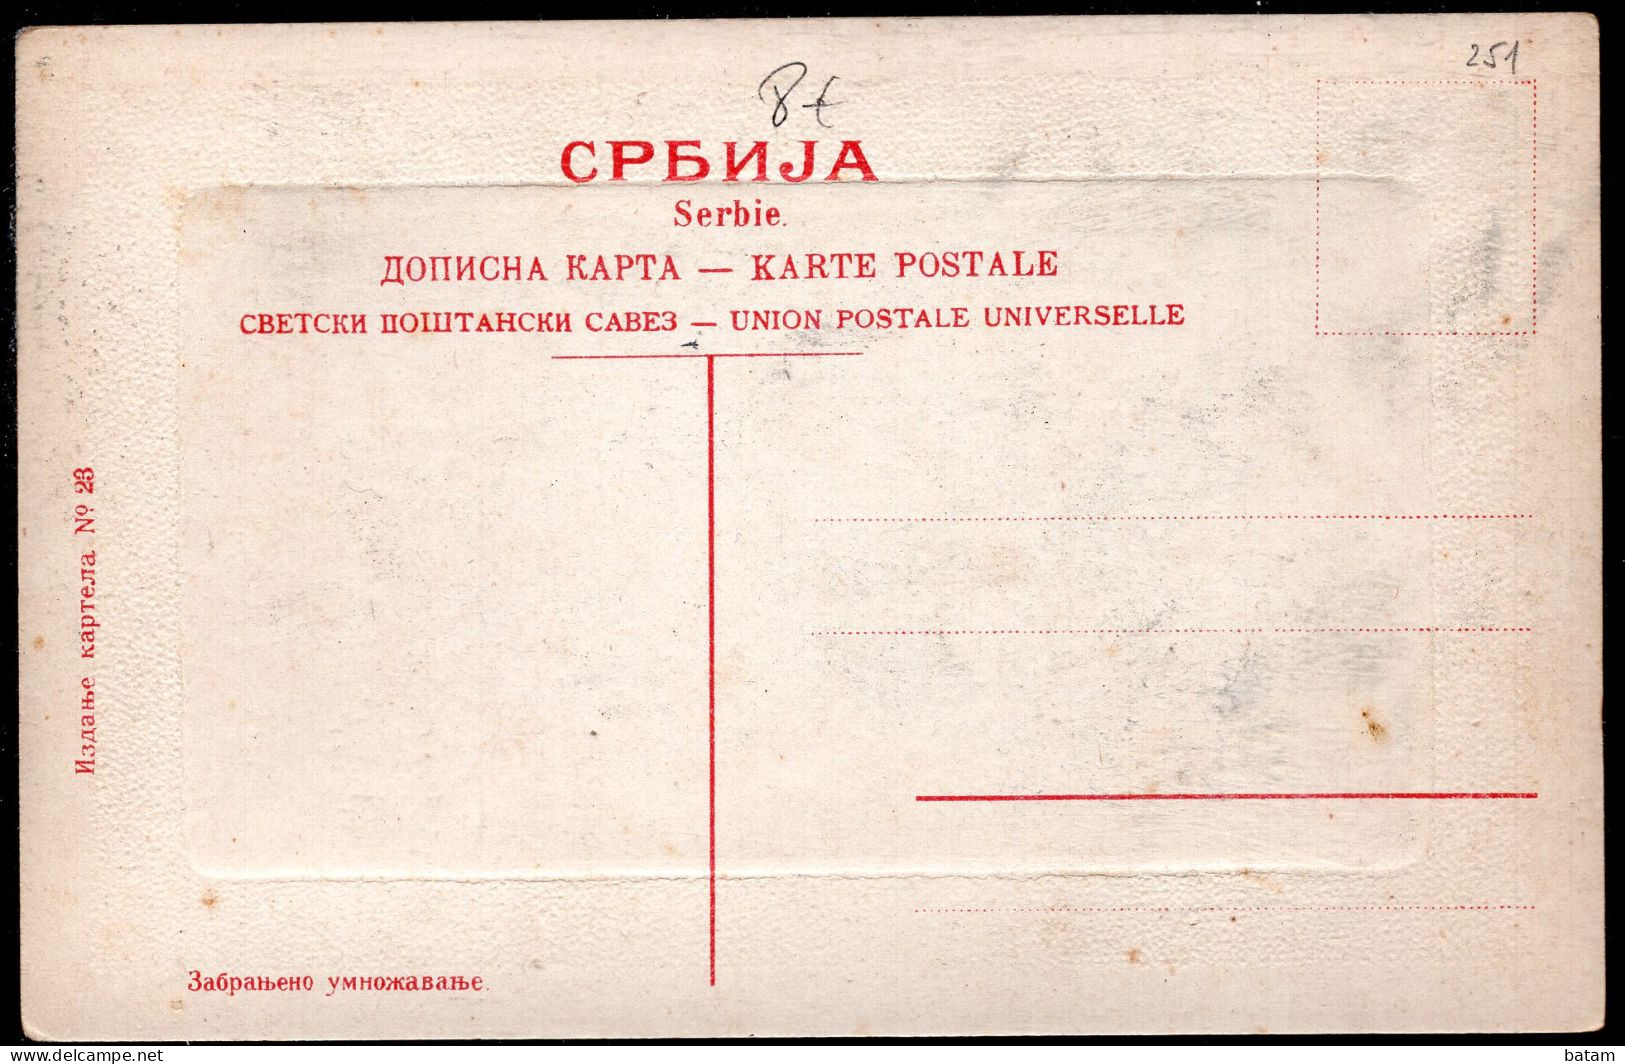 251 - Beograd - Belgrade - Serbia - Postcard - Serbien